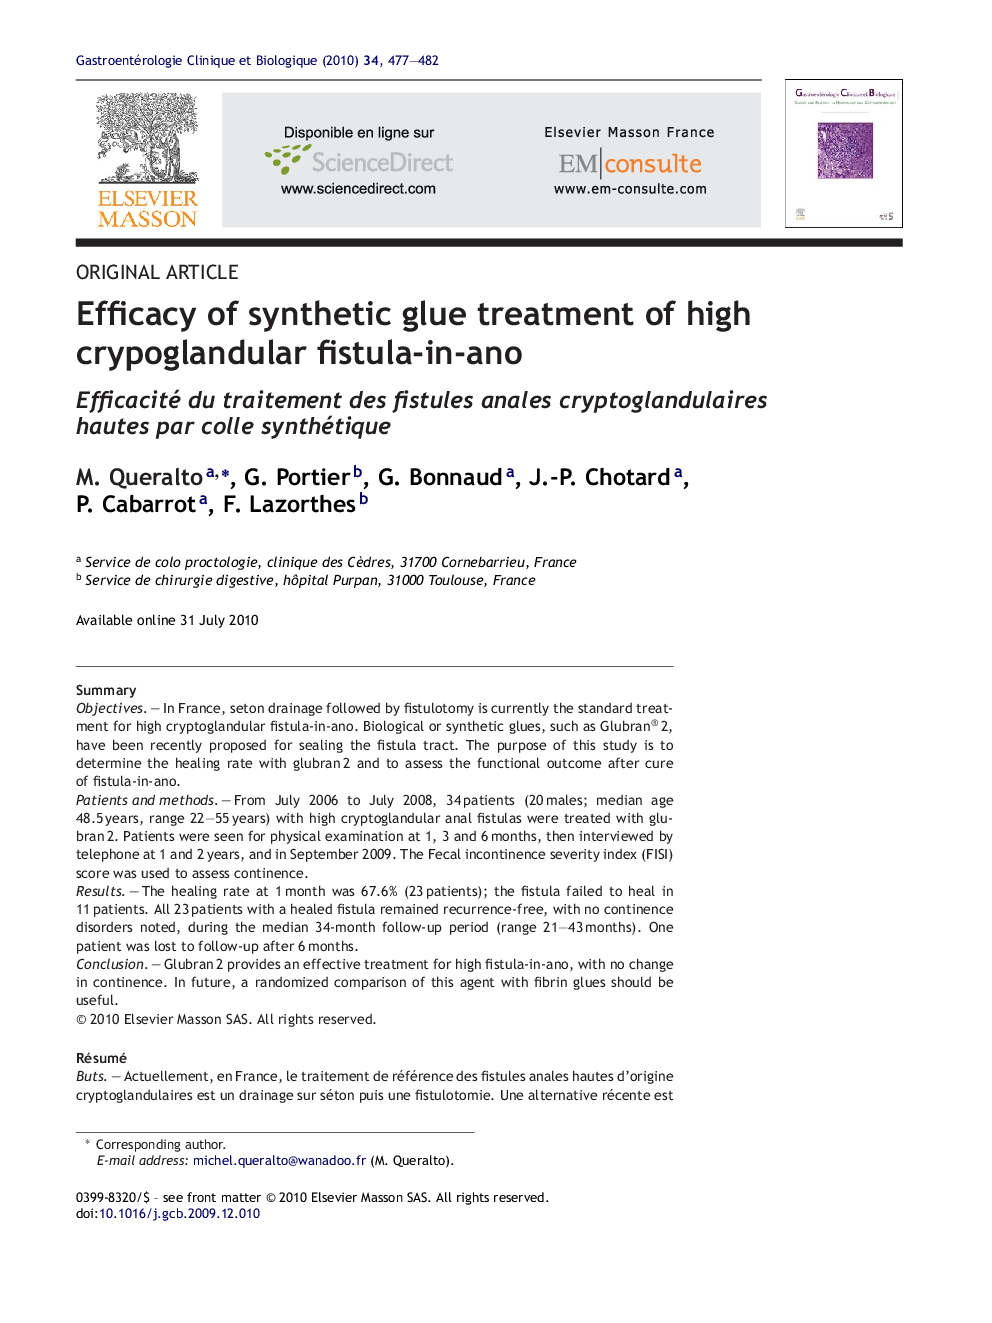 Efficacy of synthetic glue treatment of high crypoglandular fistula-in-ano